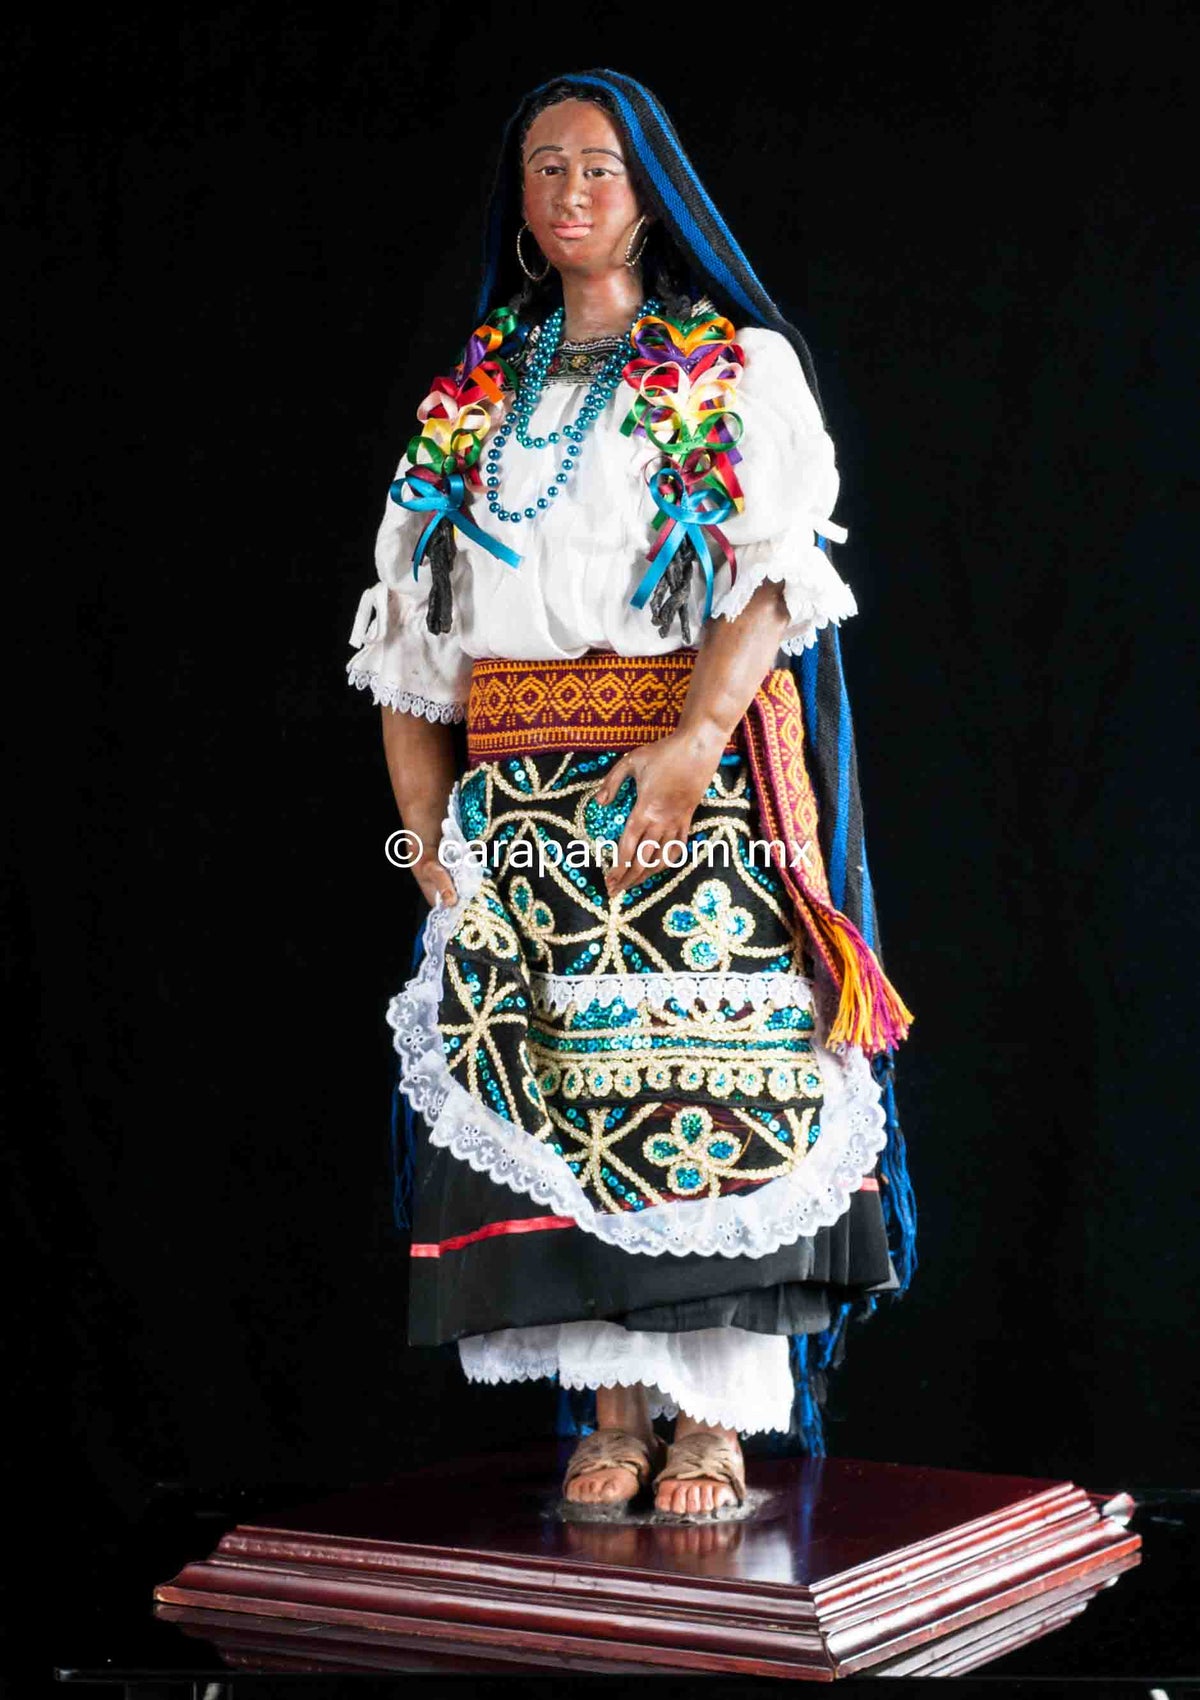 Mexican Wax Sculpture of Purepecha Indigenous Woman